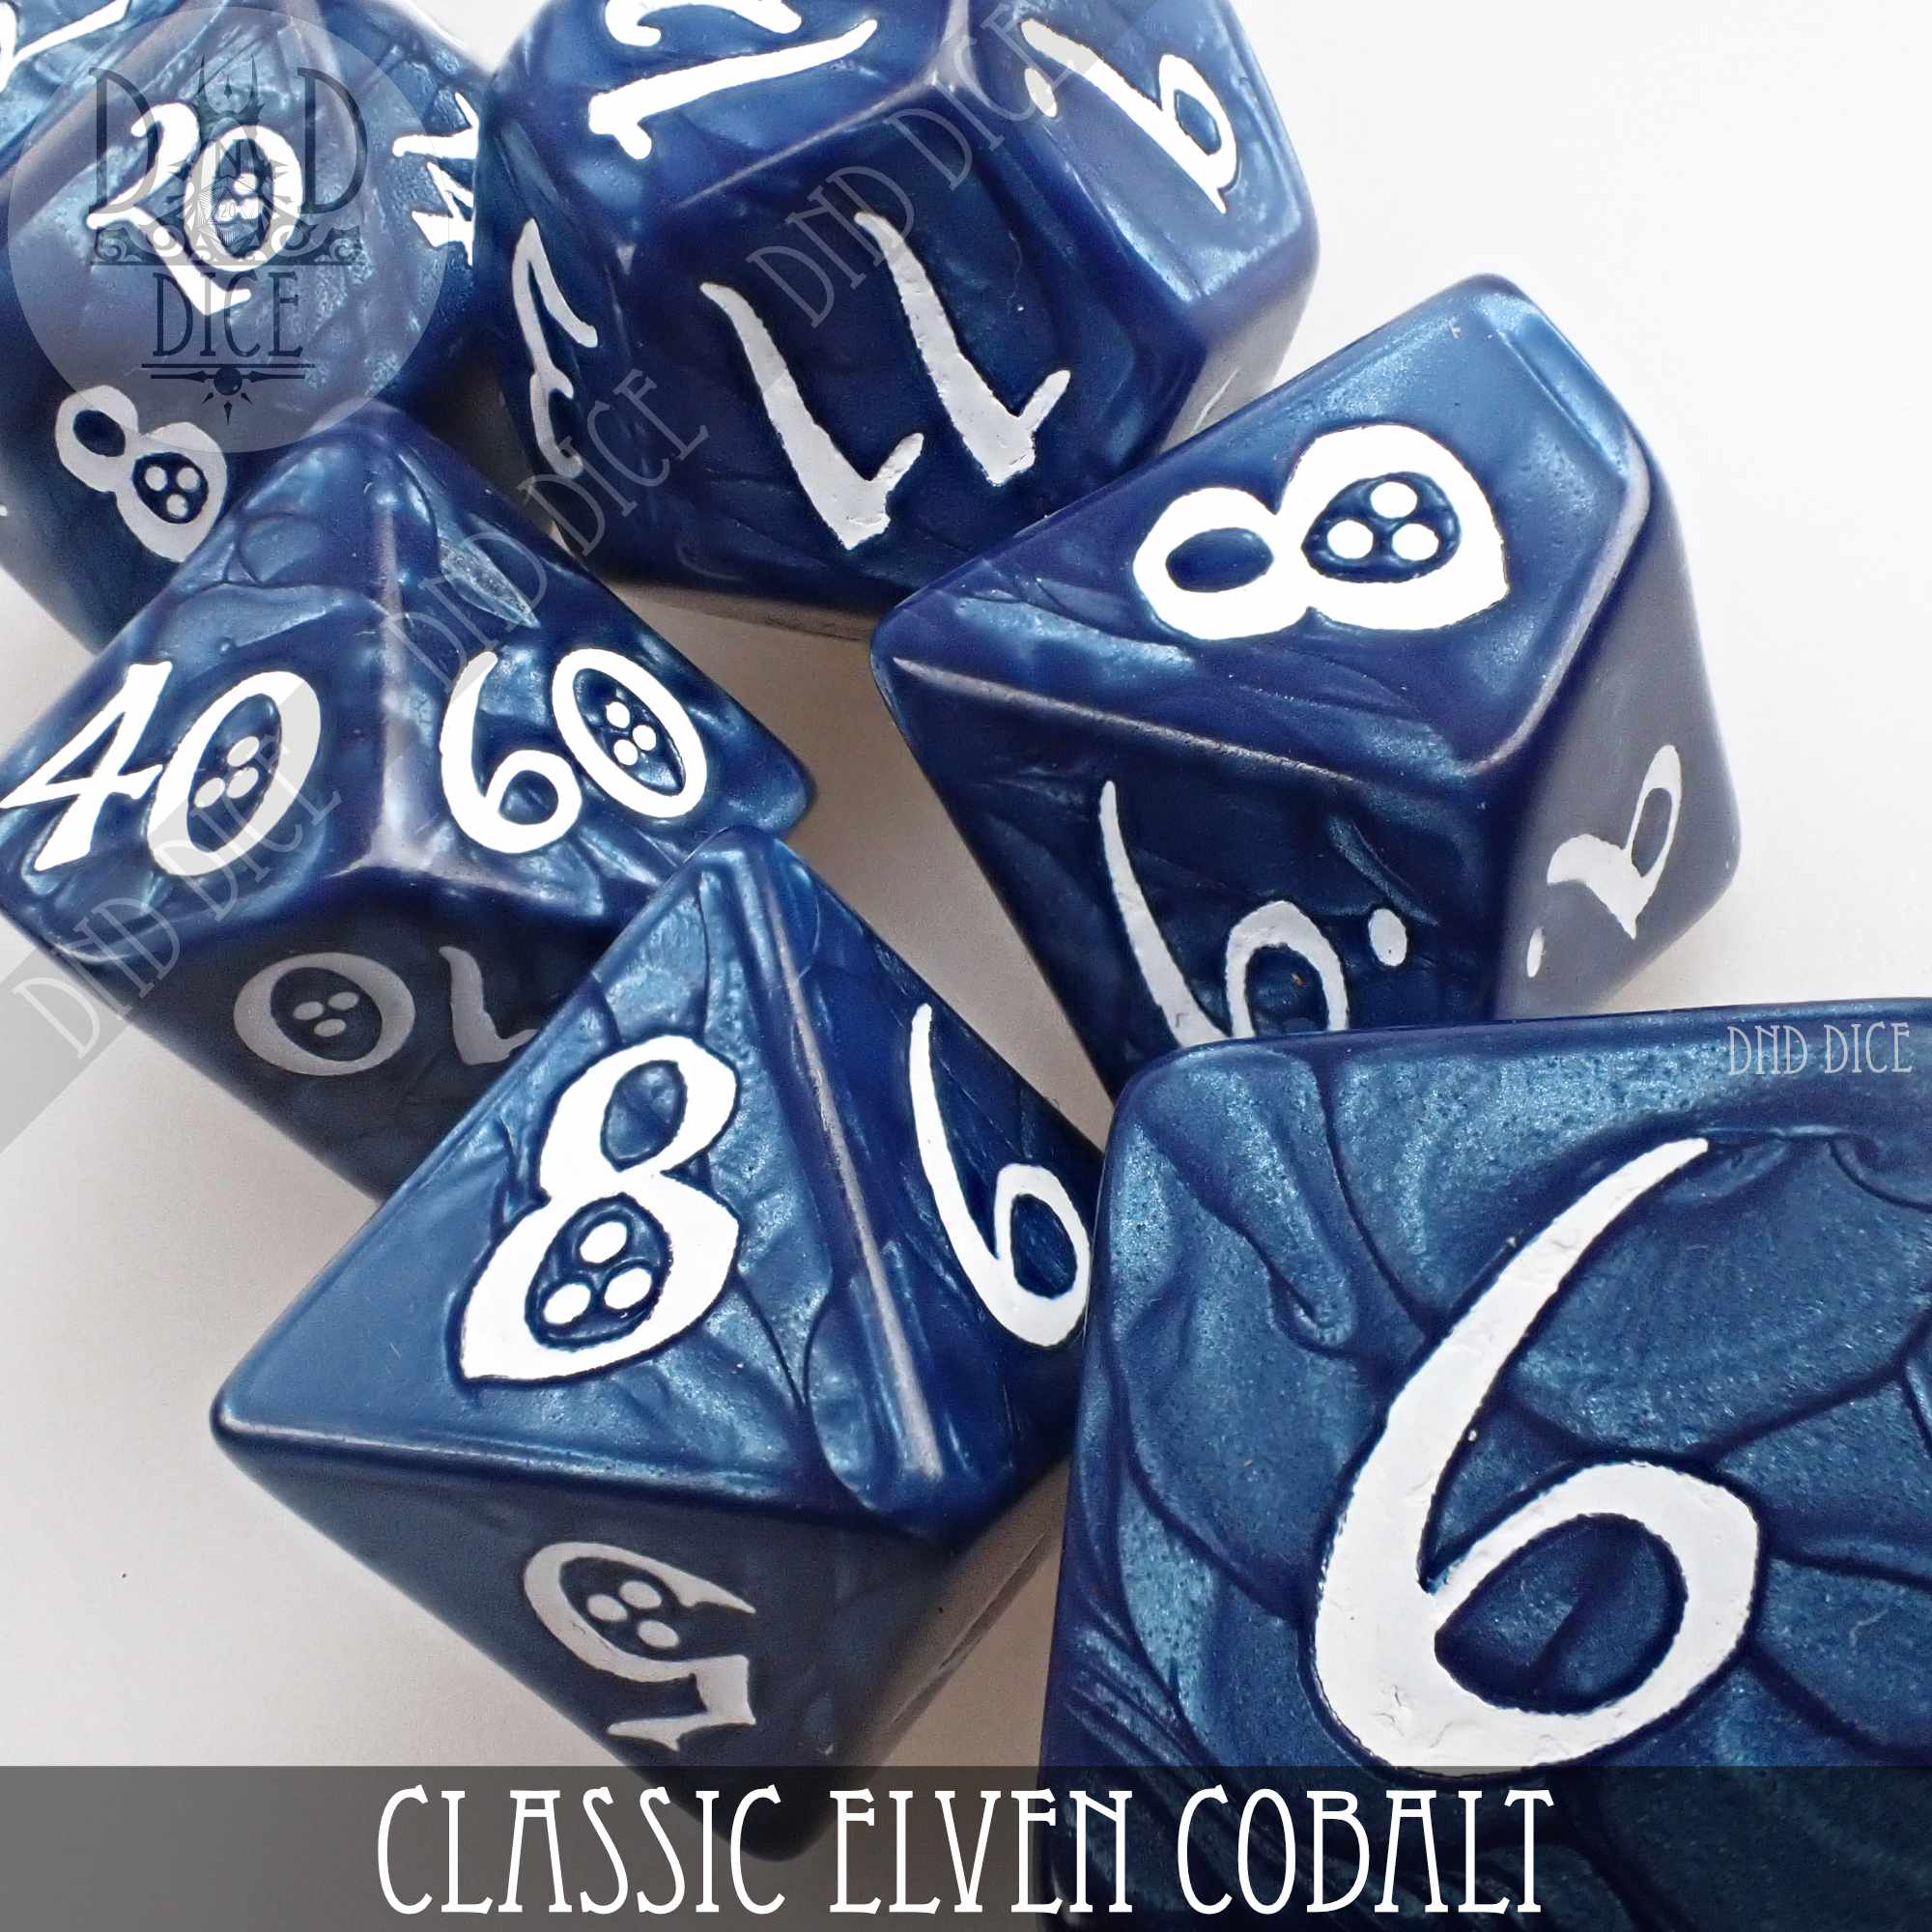 Classic Elven Cobalt Dice Set